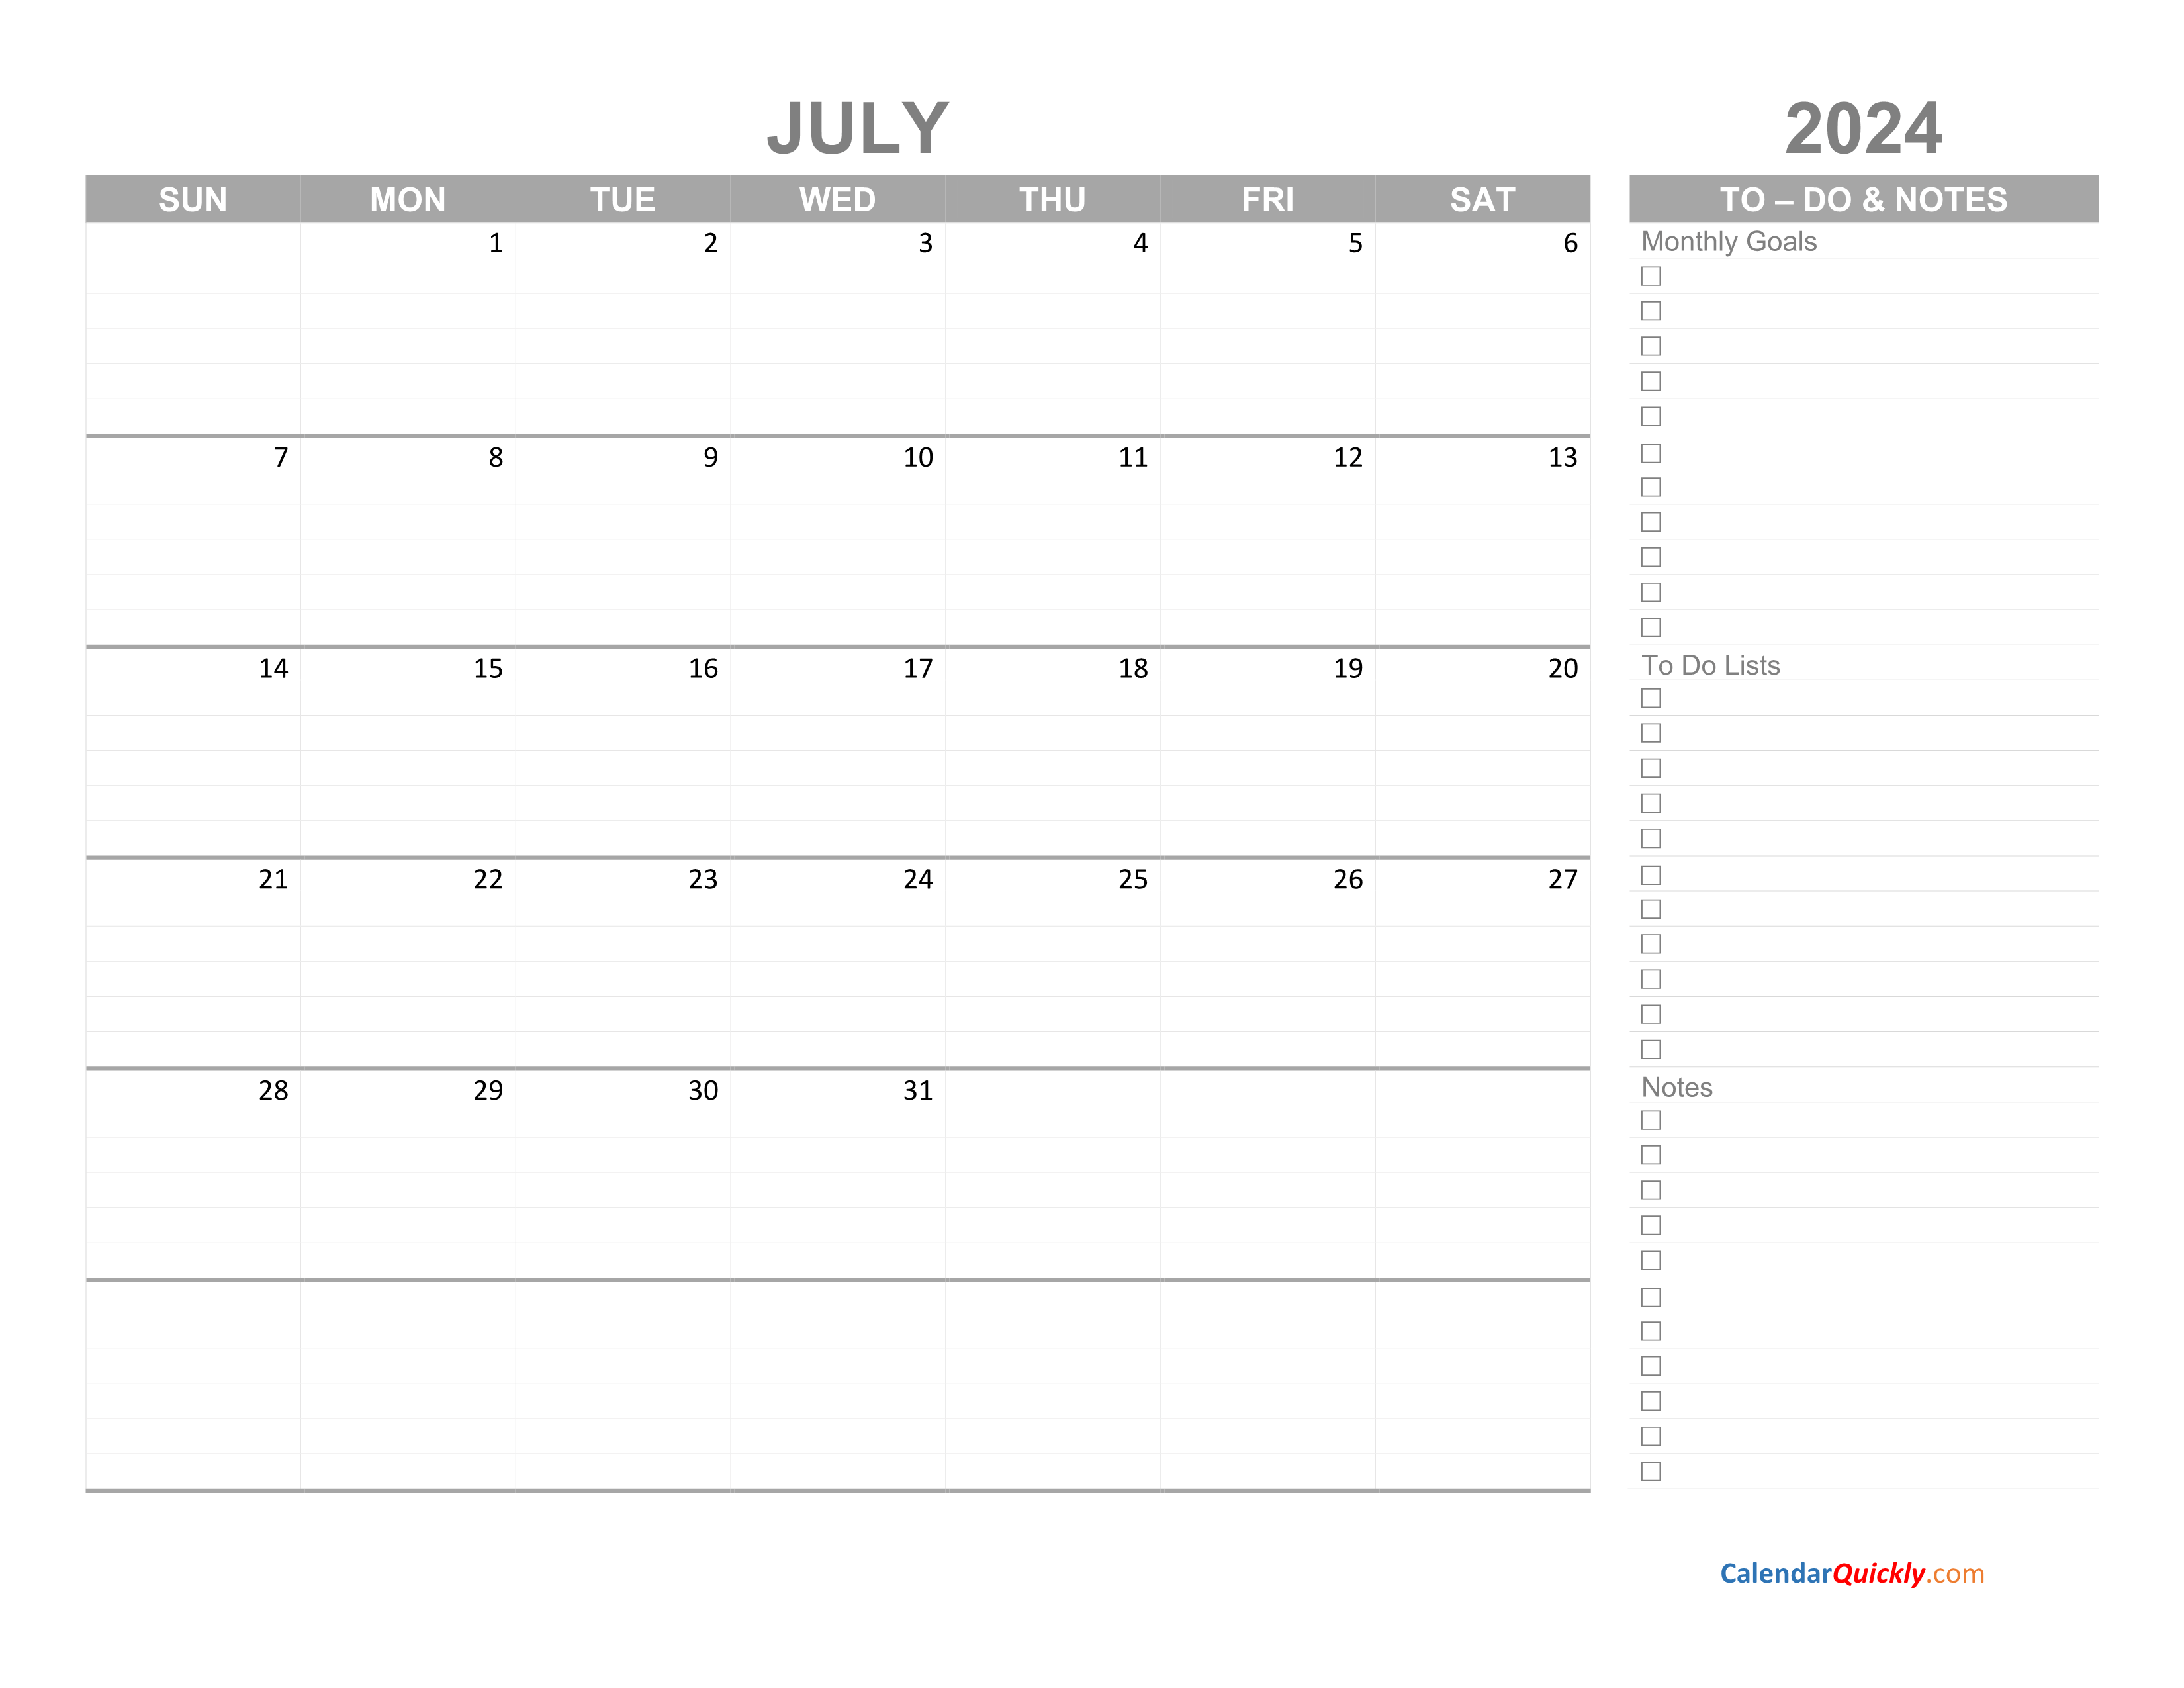 July 2024 Calendar with ToDo List Calendar Quickly